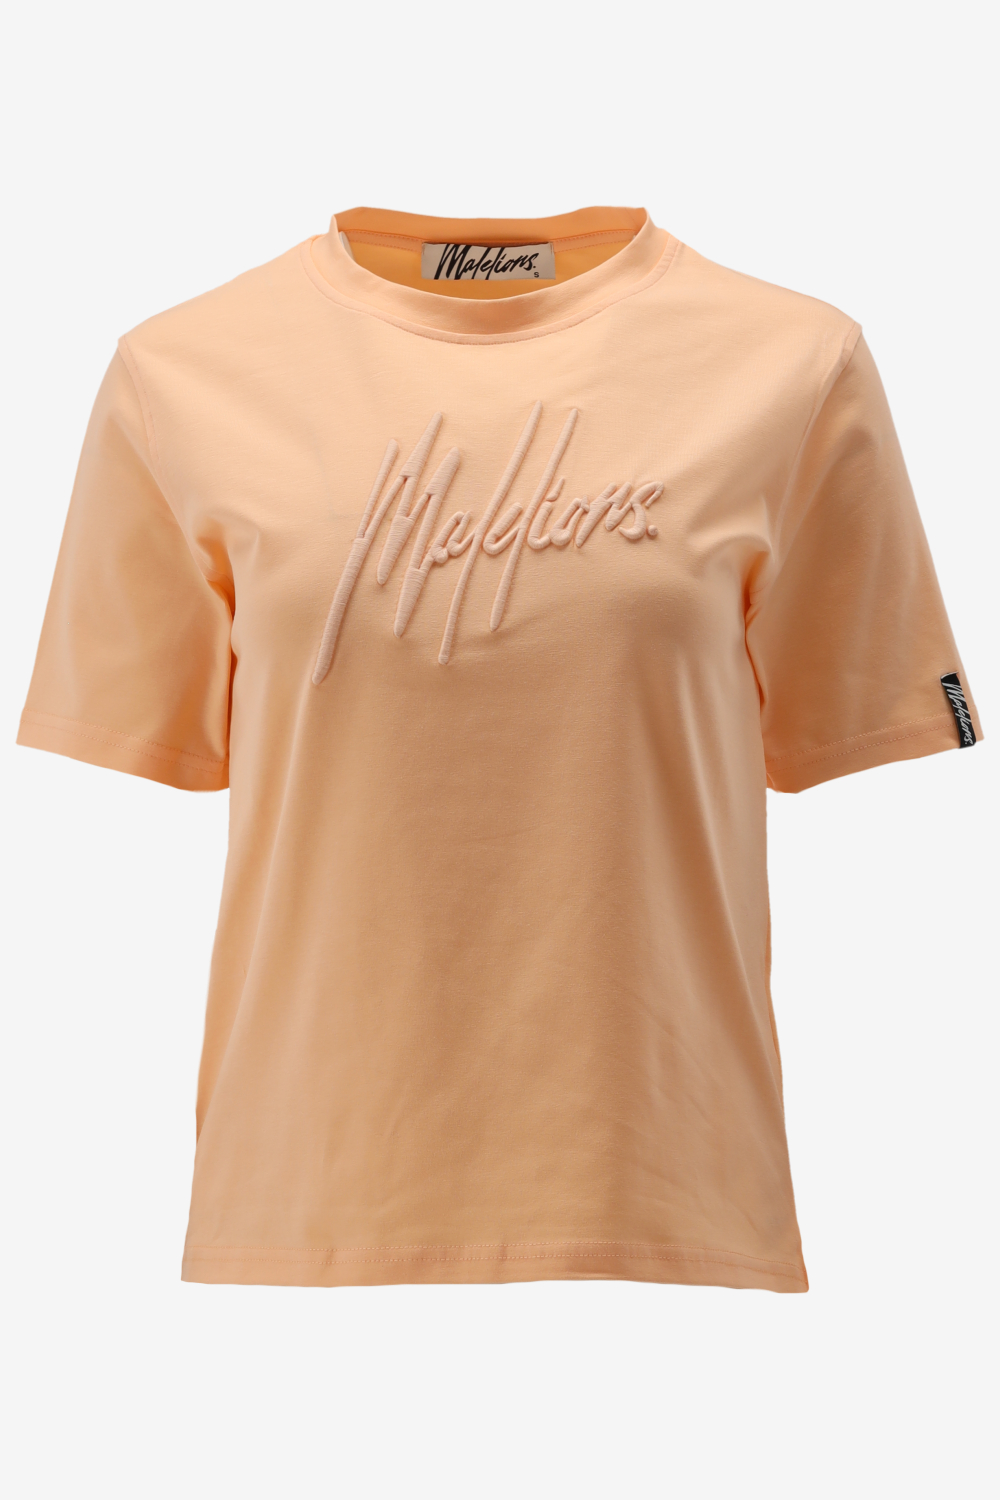 Malelions T shirt